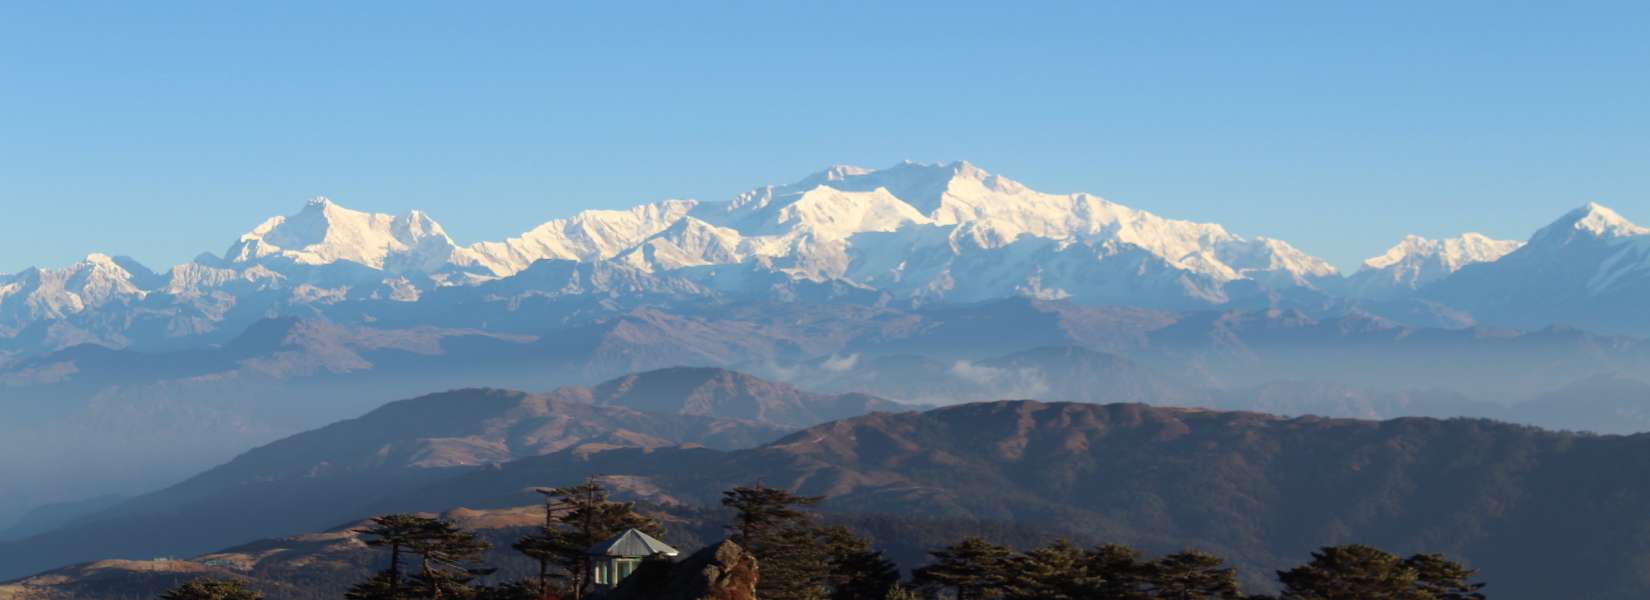 Mount . Kanchanzonga range